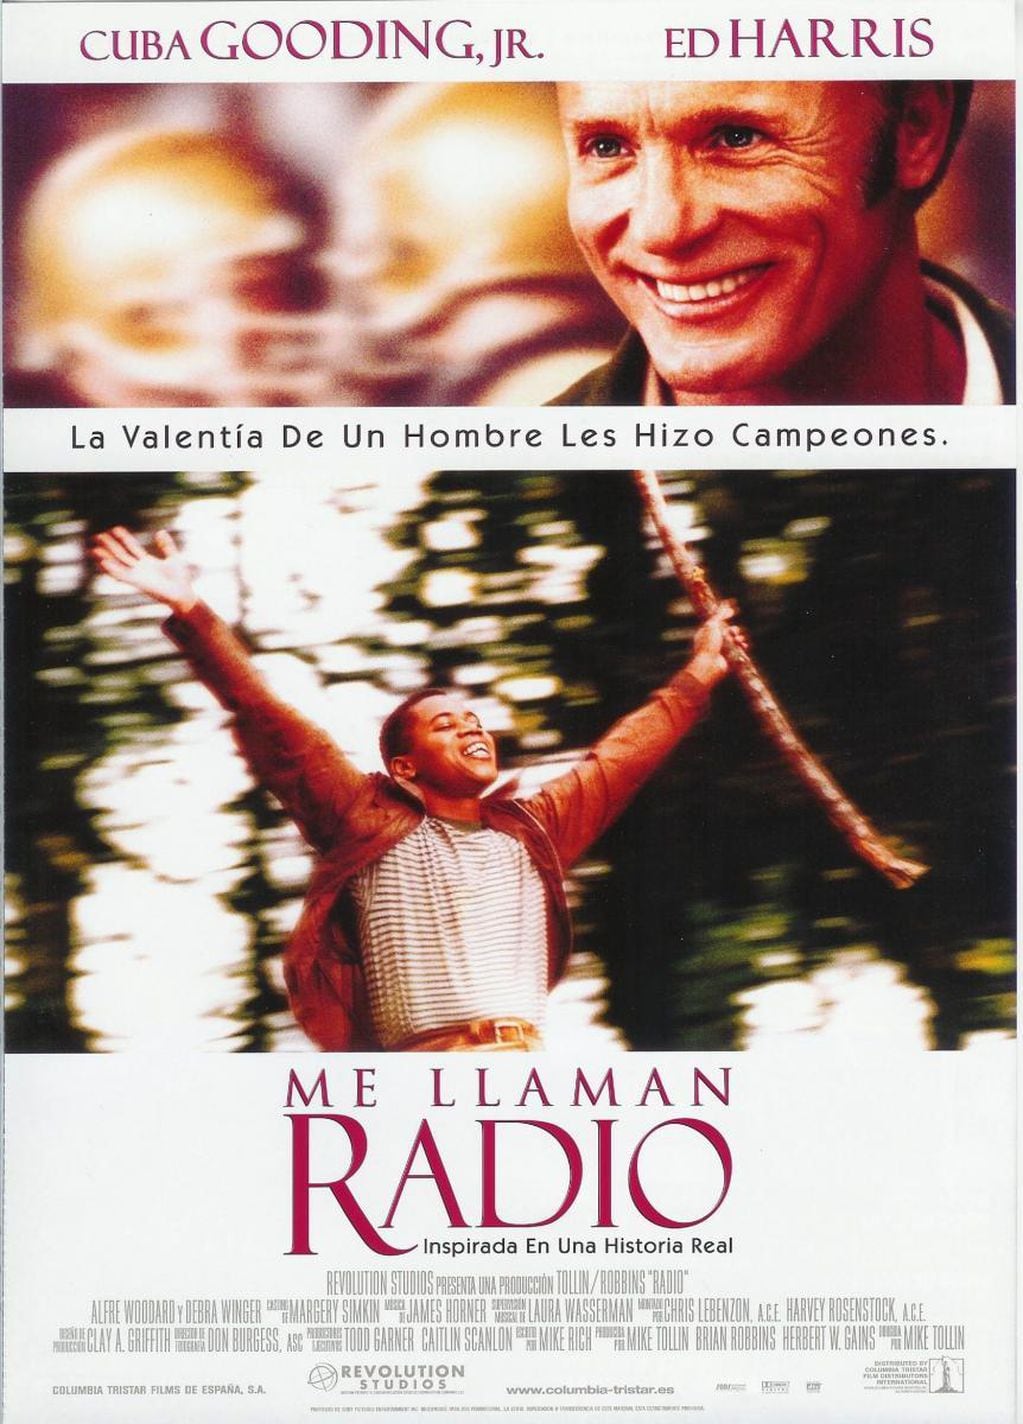 Me llaman Radio (Michael Tollin, 2003)